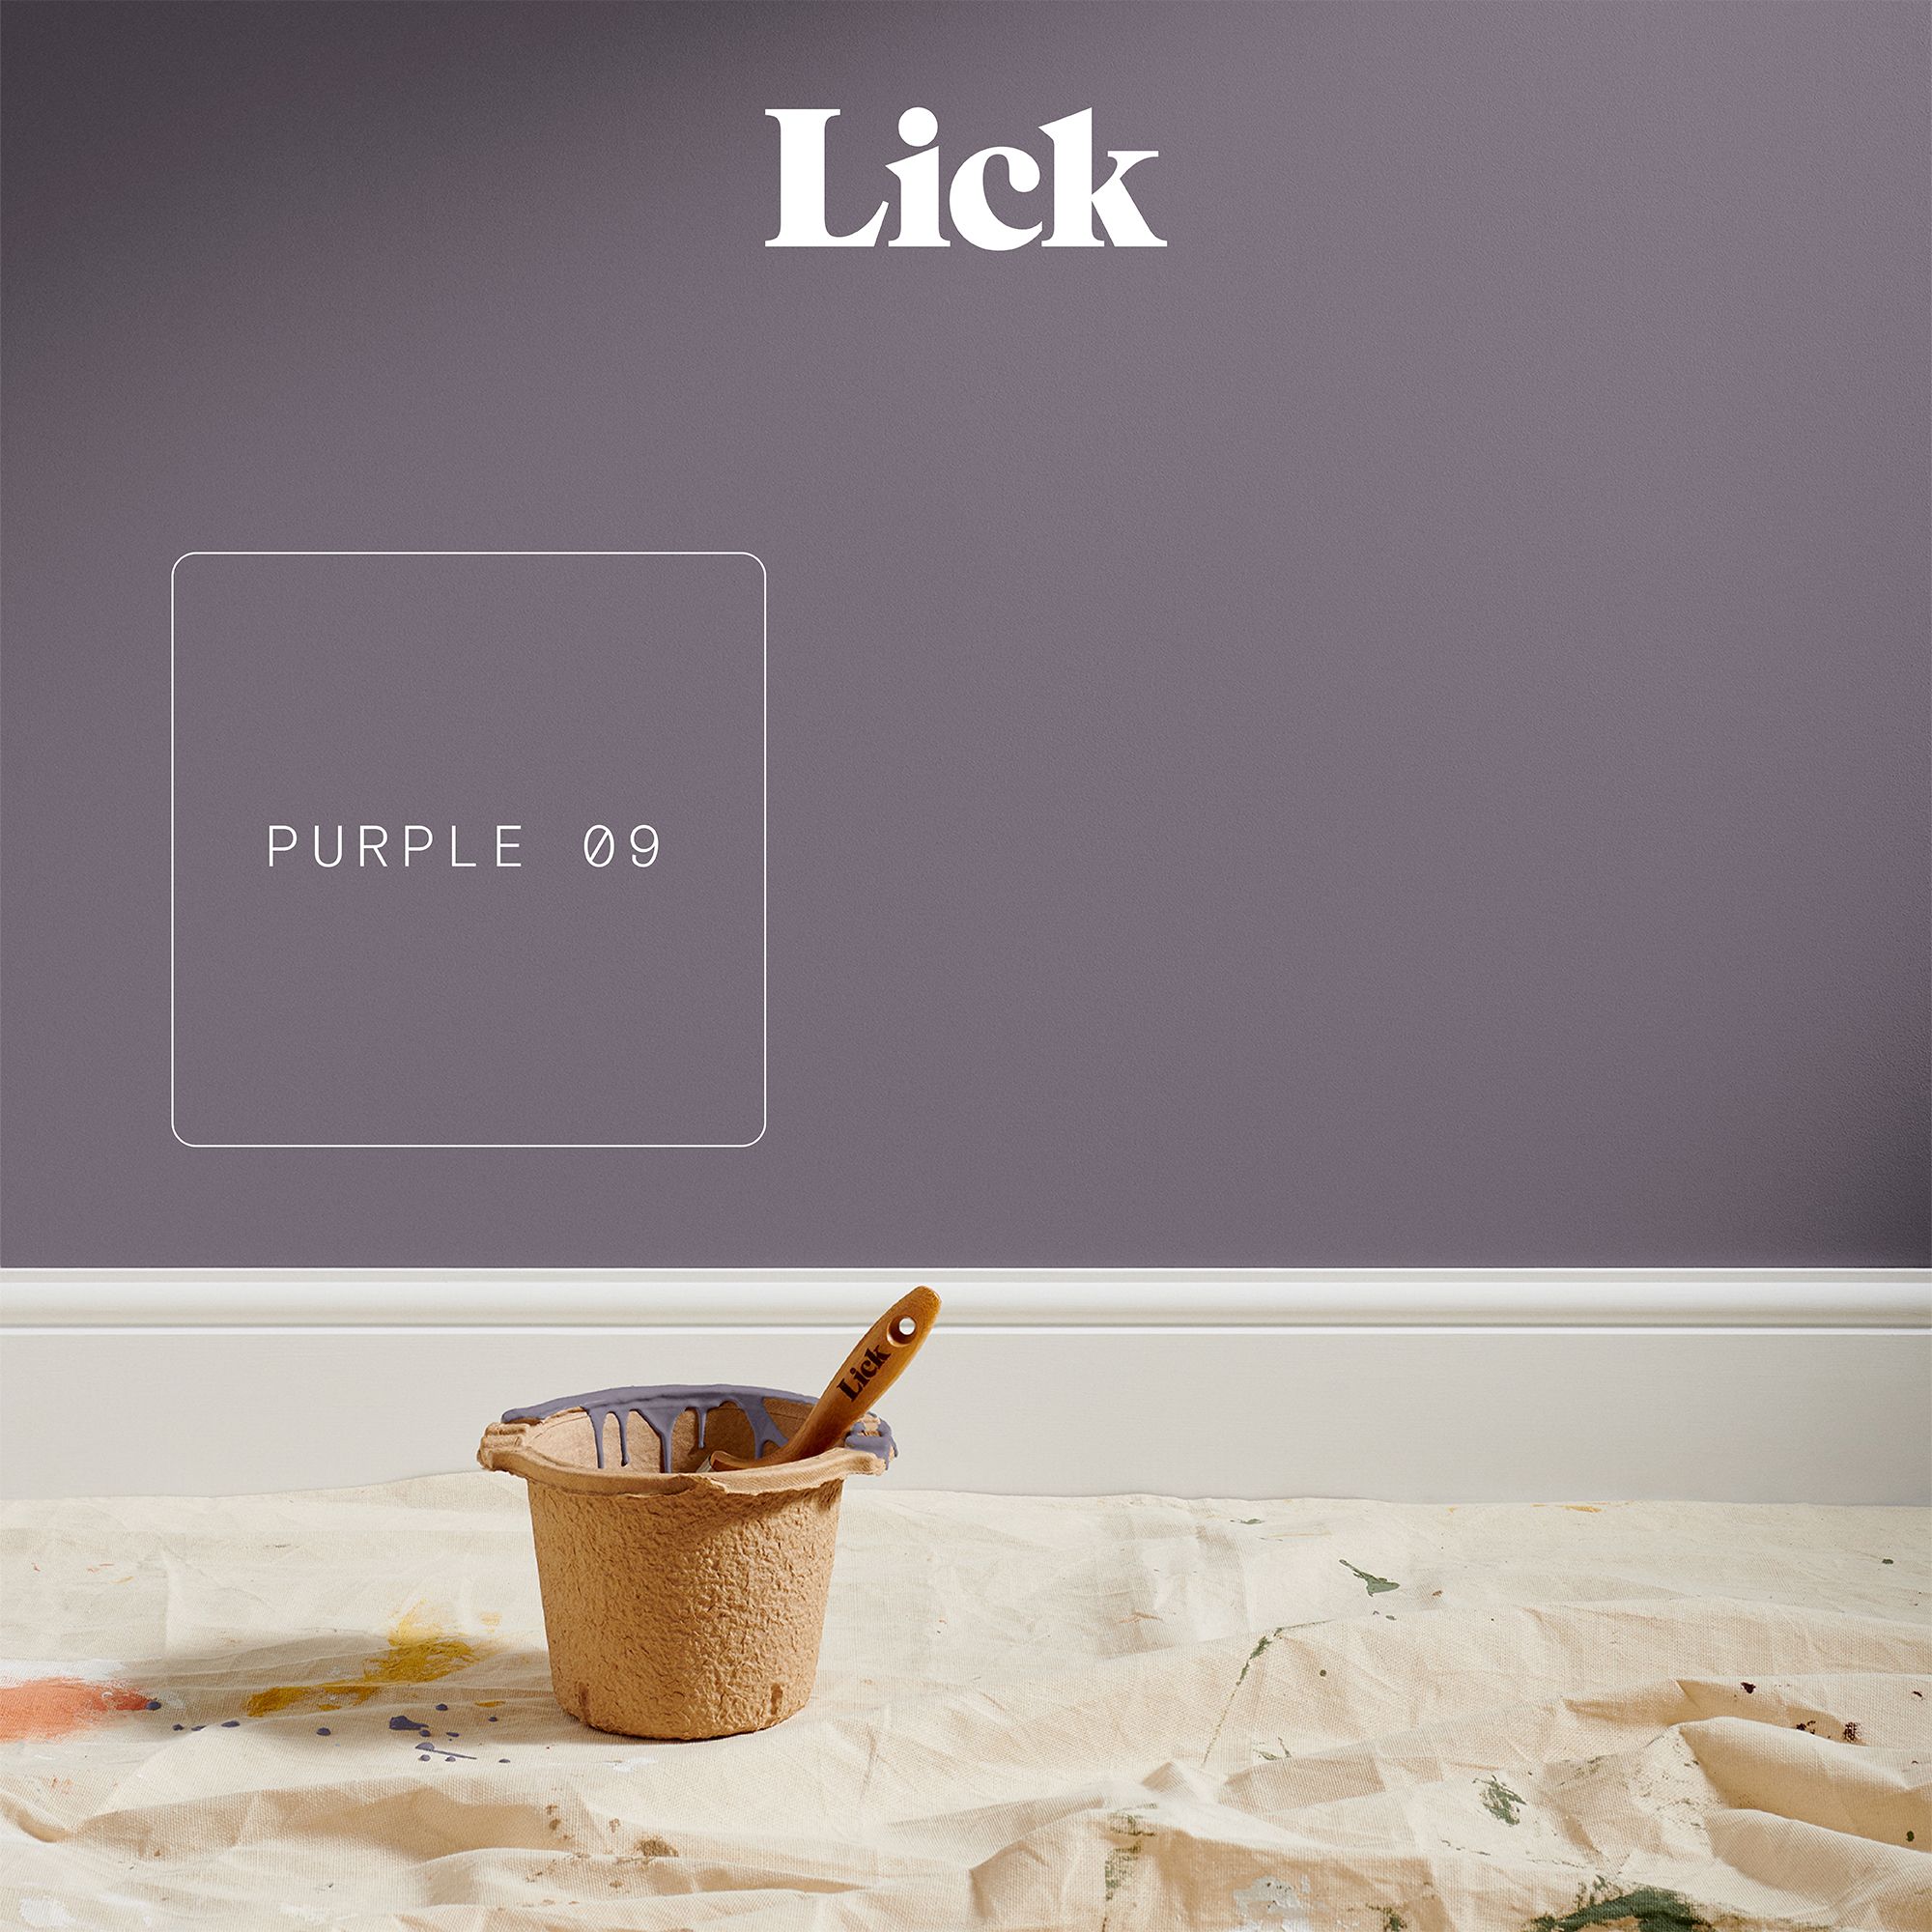 Lick Purple 09 Matt Emulsion paint, 2.5L